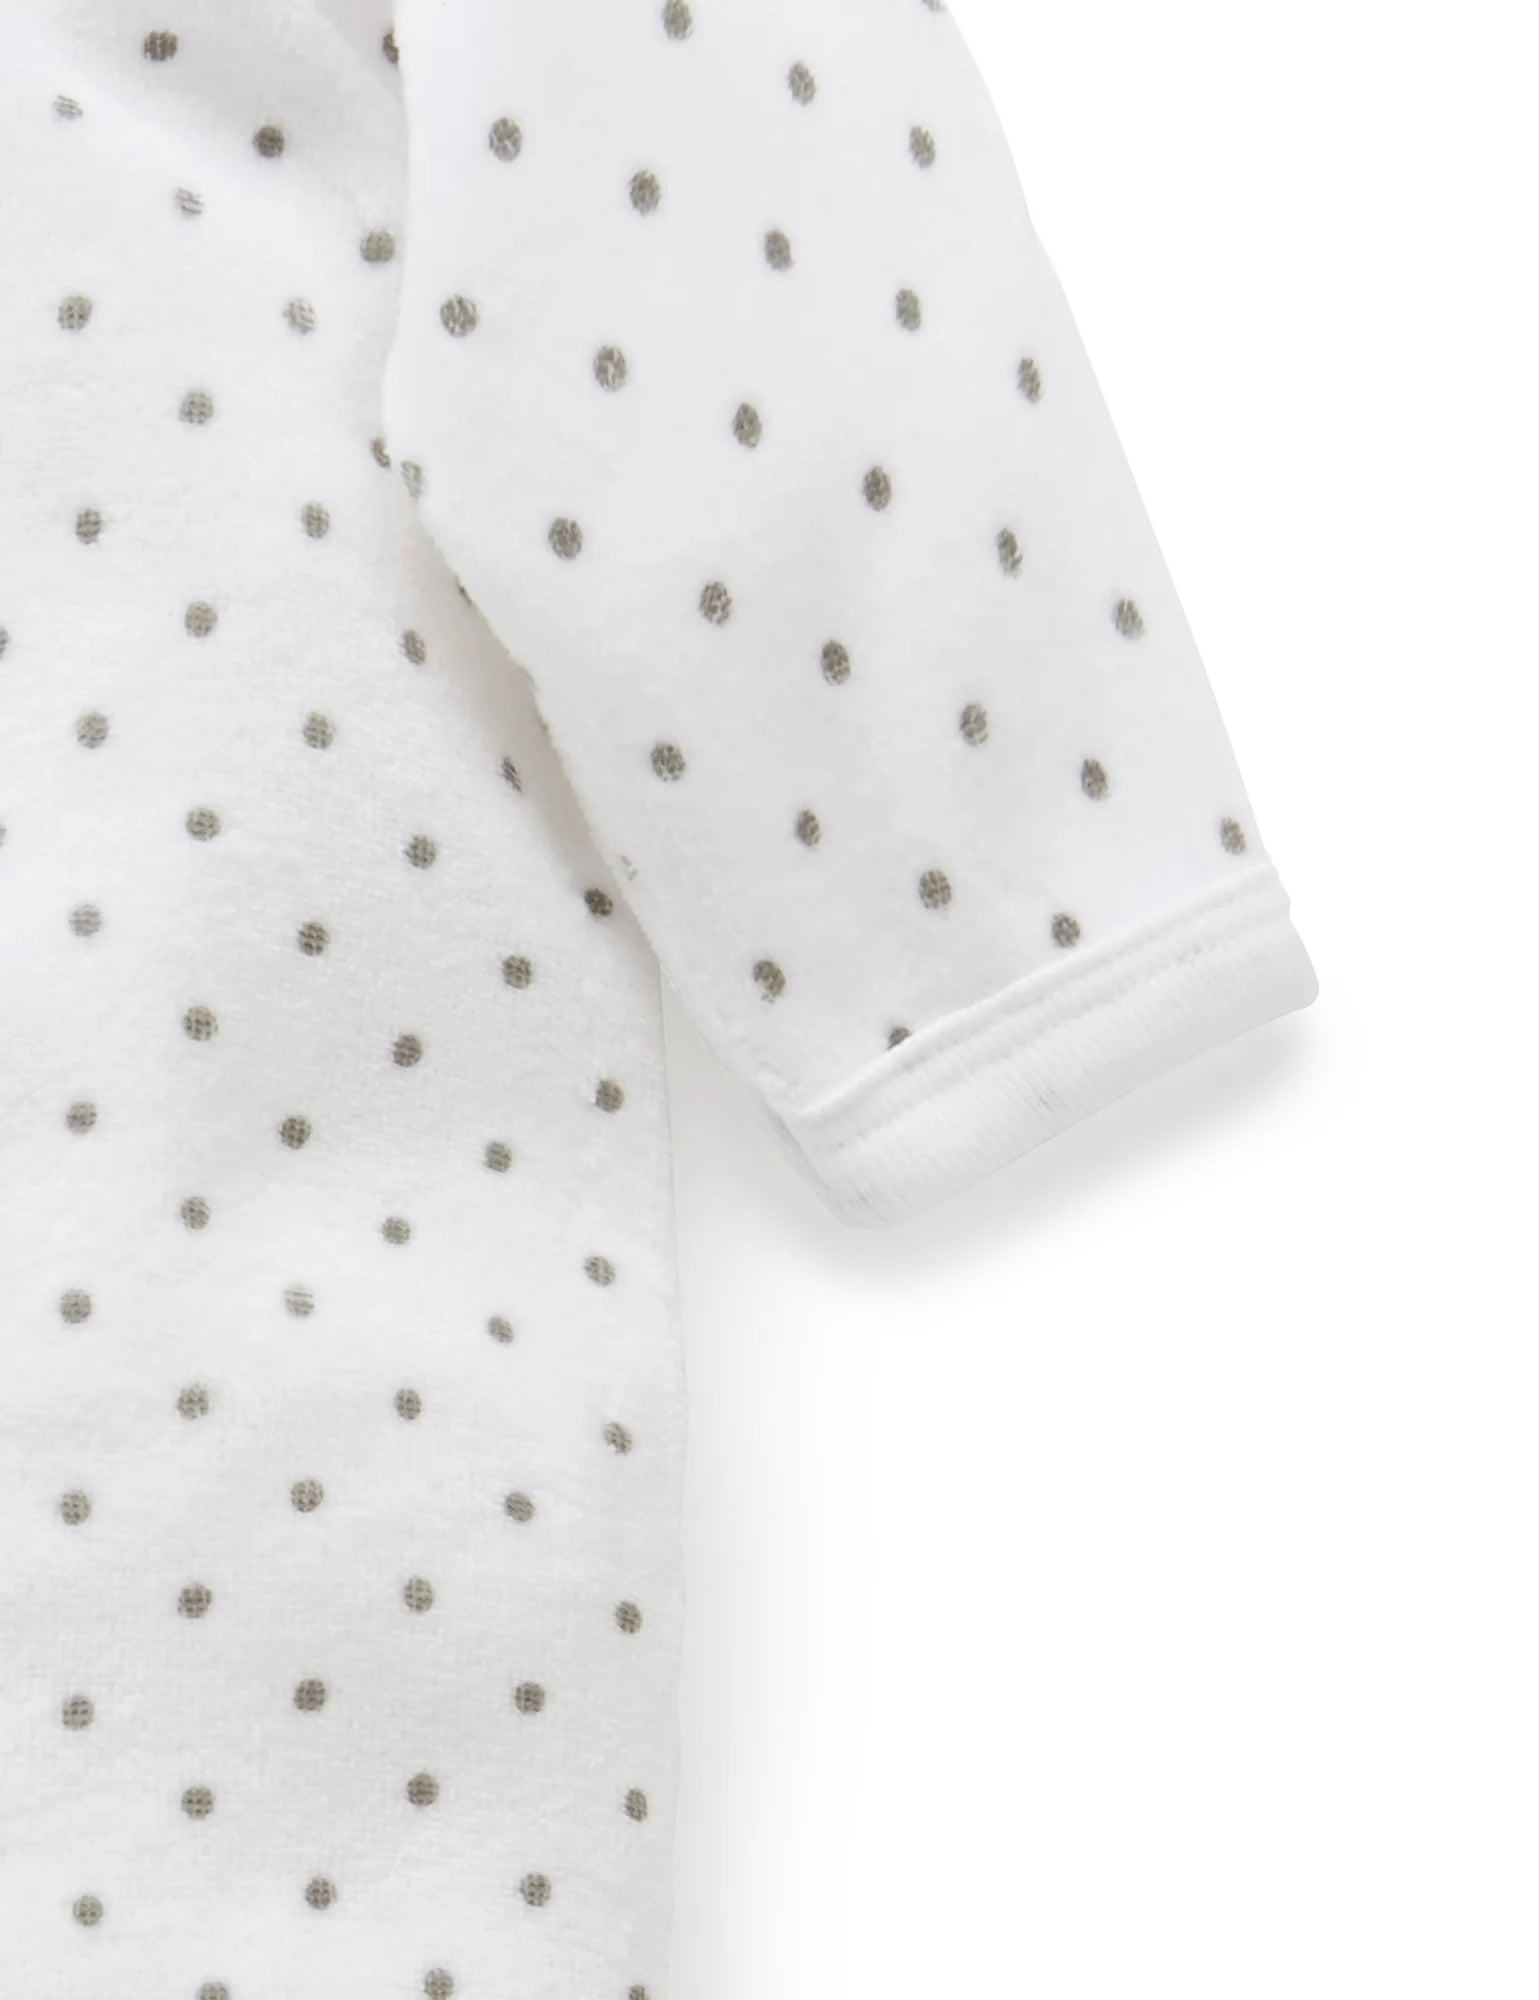 Purebaby Premi Velour Growsuit - White With Grey Spot